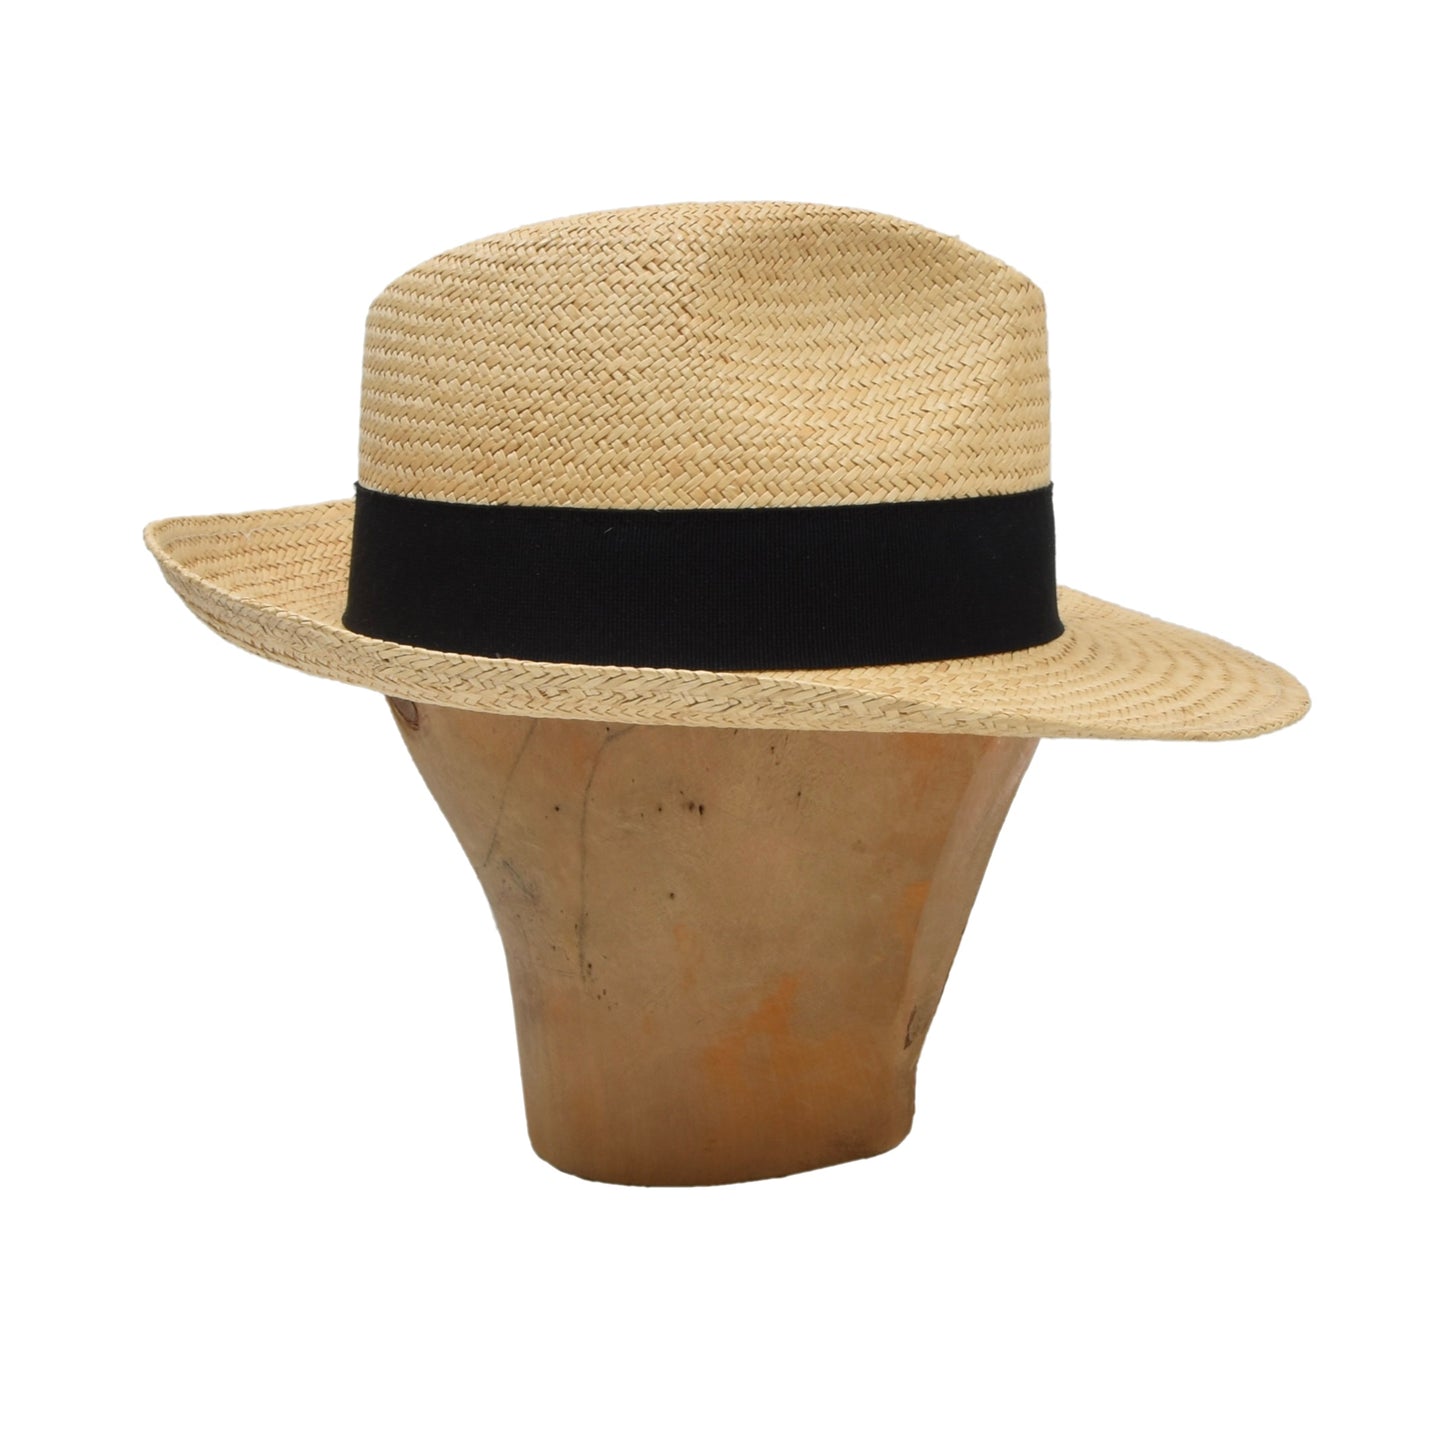 Oriental Panama Straw Hat Size 57 - Beige/Tan